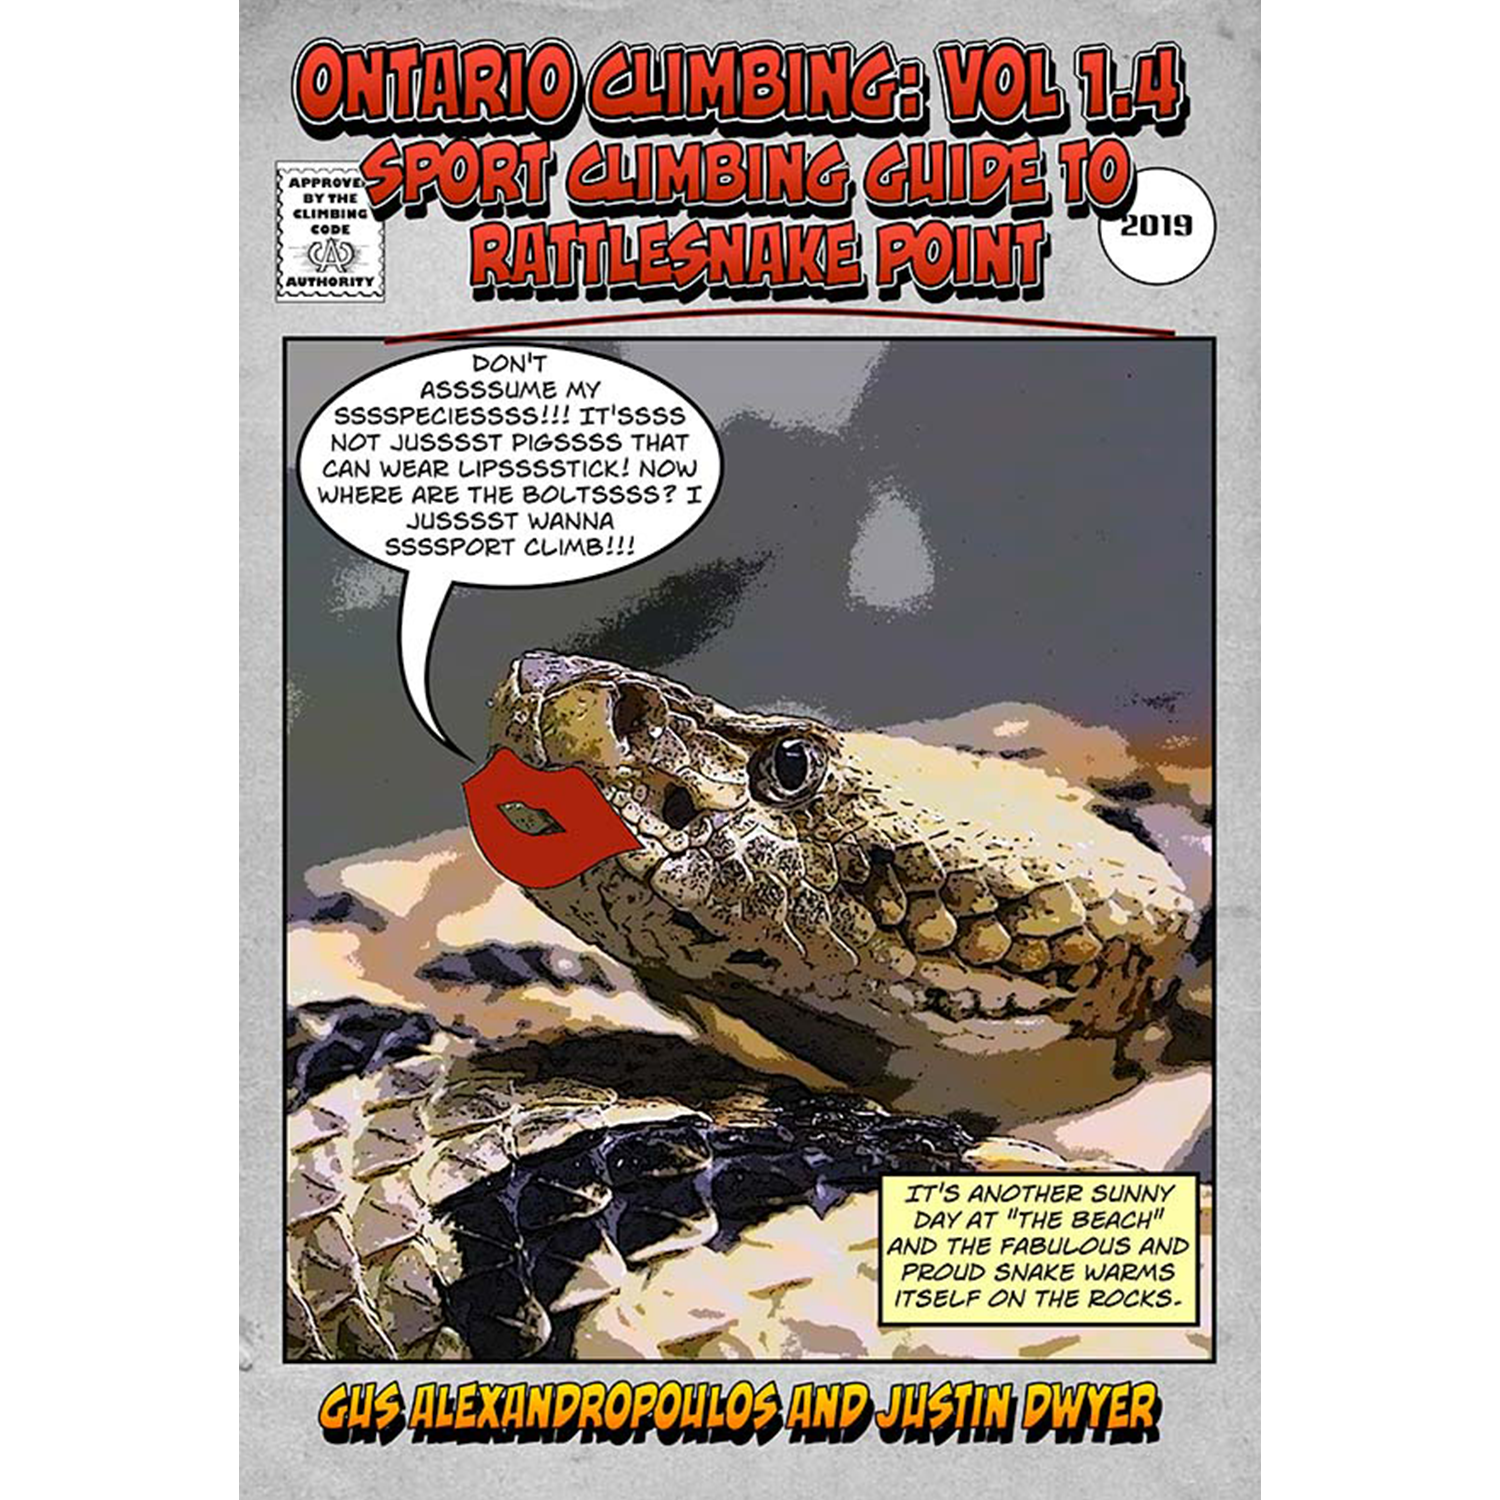 Ontario Climbing: Vol 1.4 Sport Climbing Guide To Rattlesnake Point